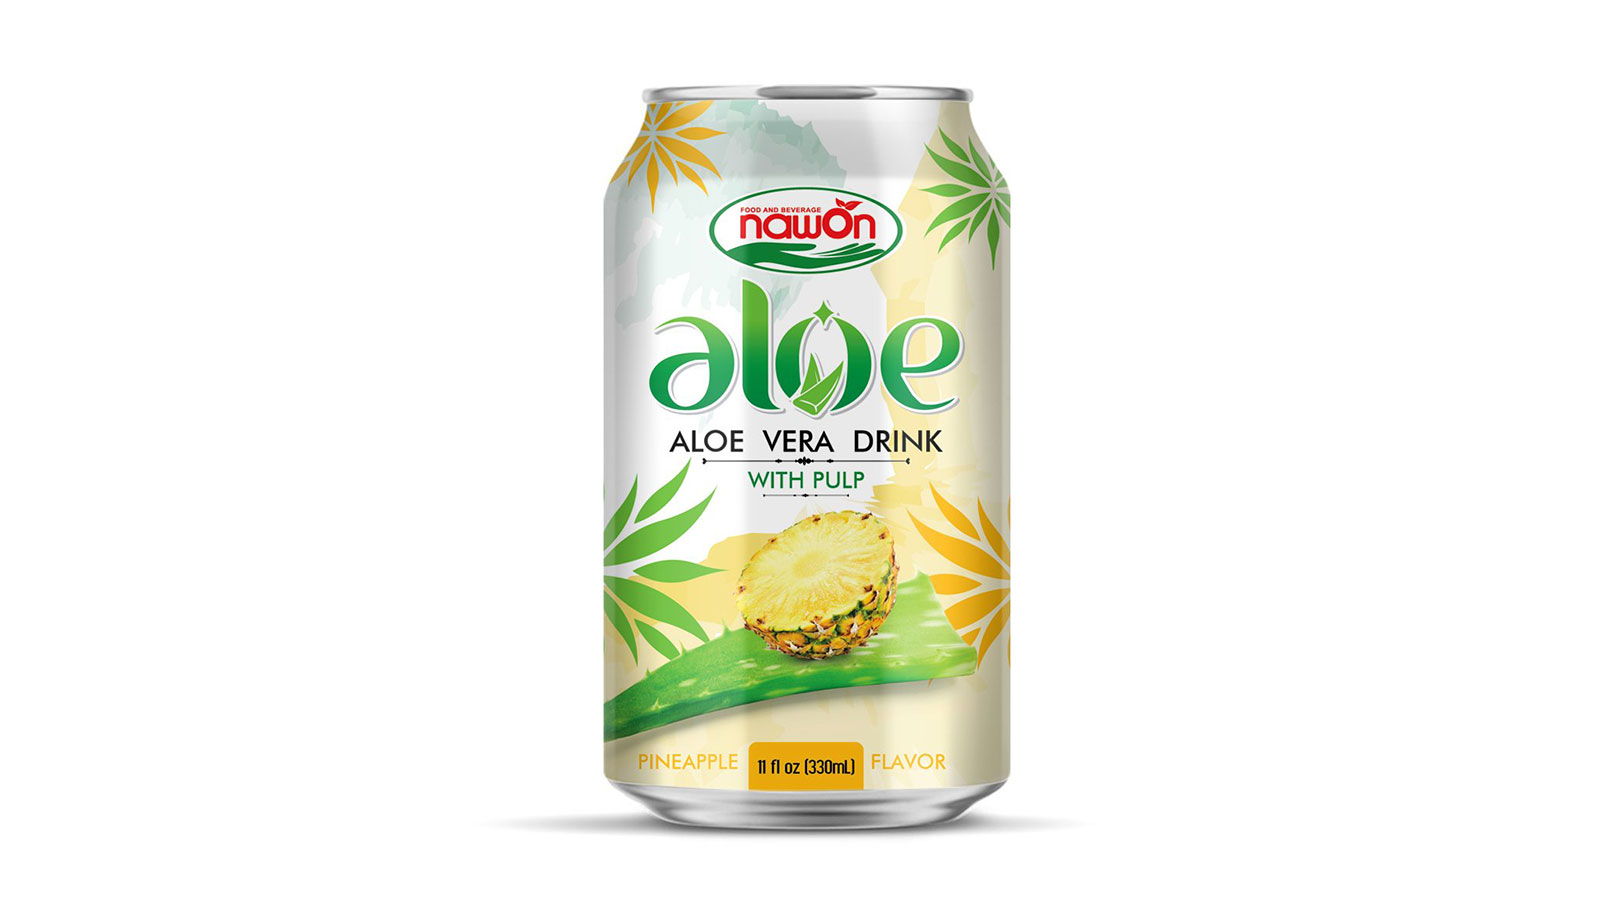 Aloe vera drink with pineapple flavor